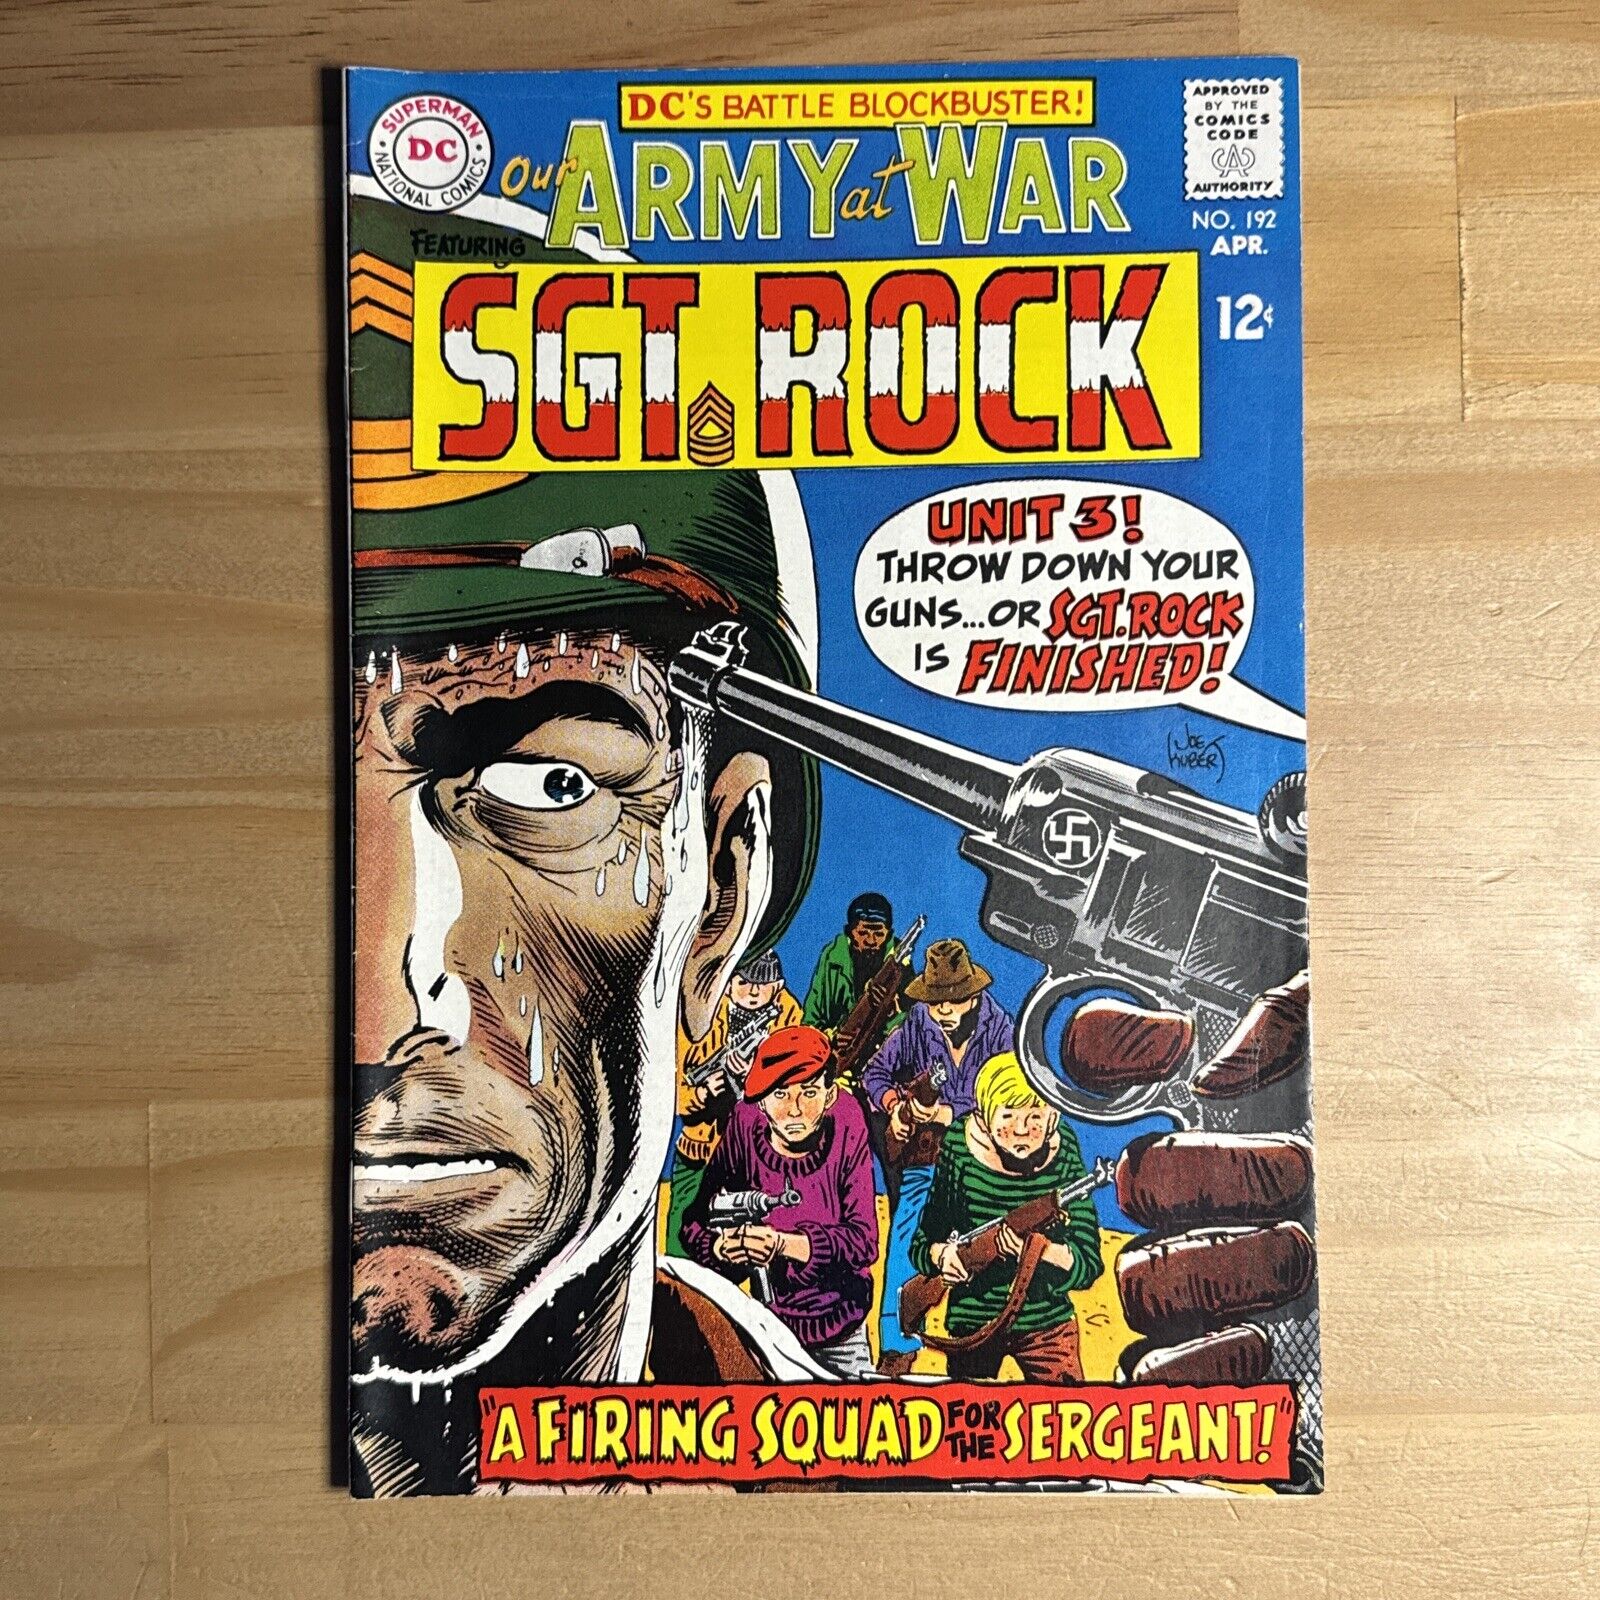 Vintage Apr 1968 OUR ARMY AT WAR #192 DC WAR Comic Book w/ SGT ROCK Joe Kubert